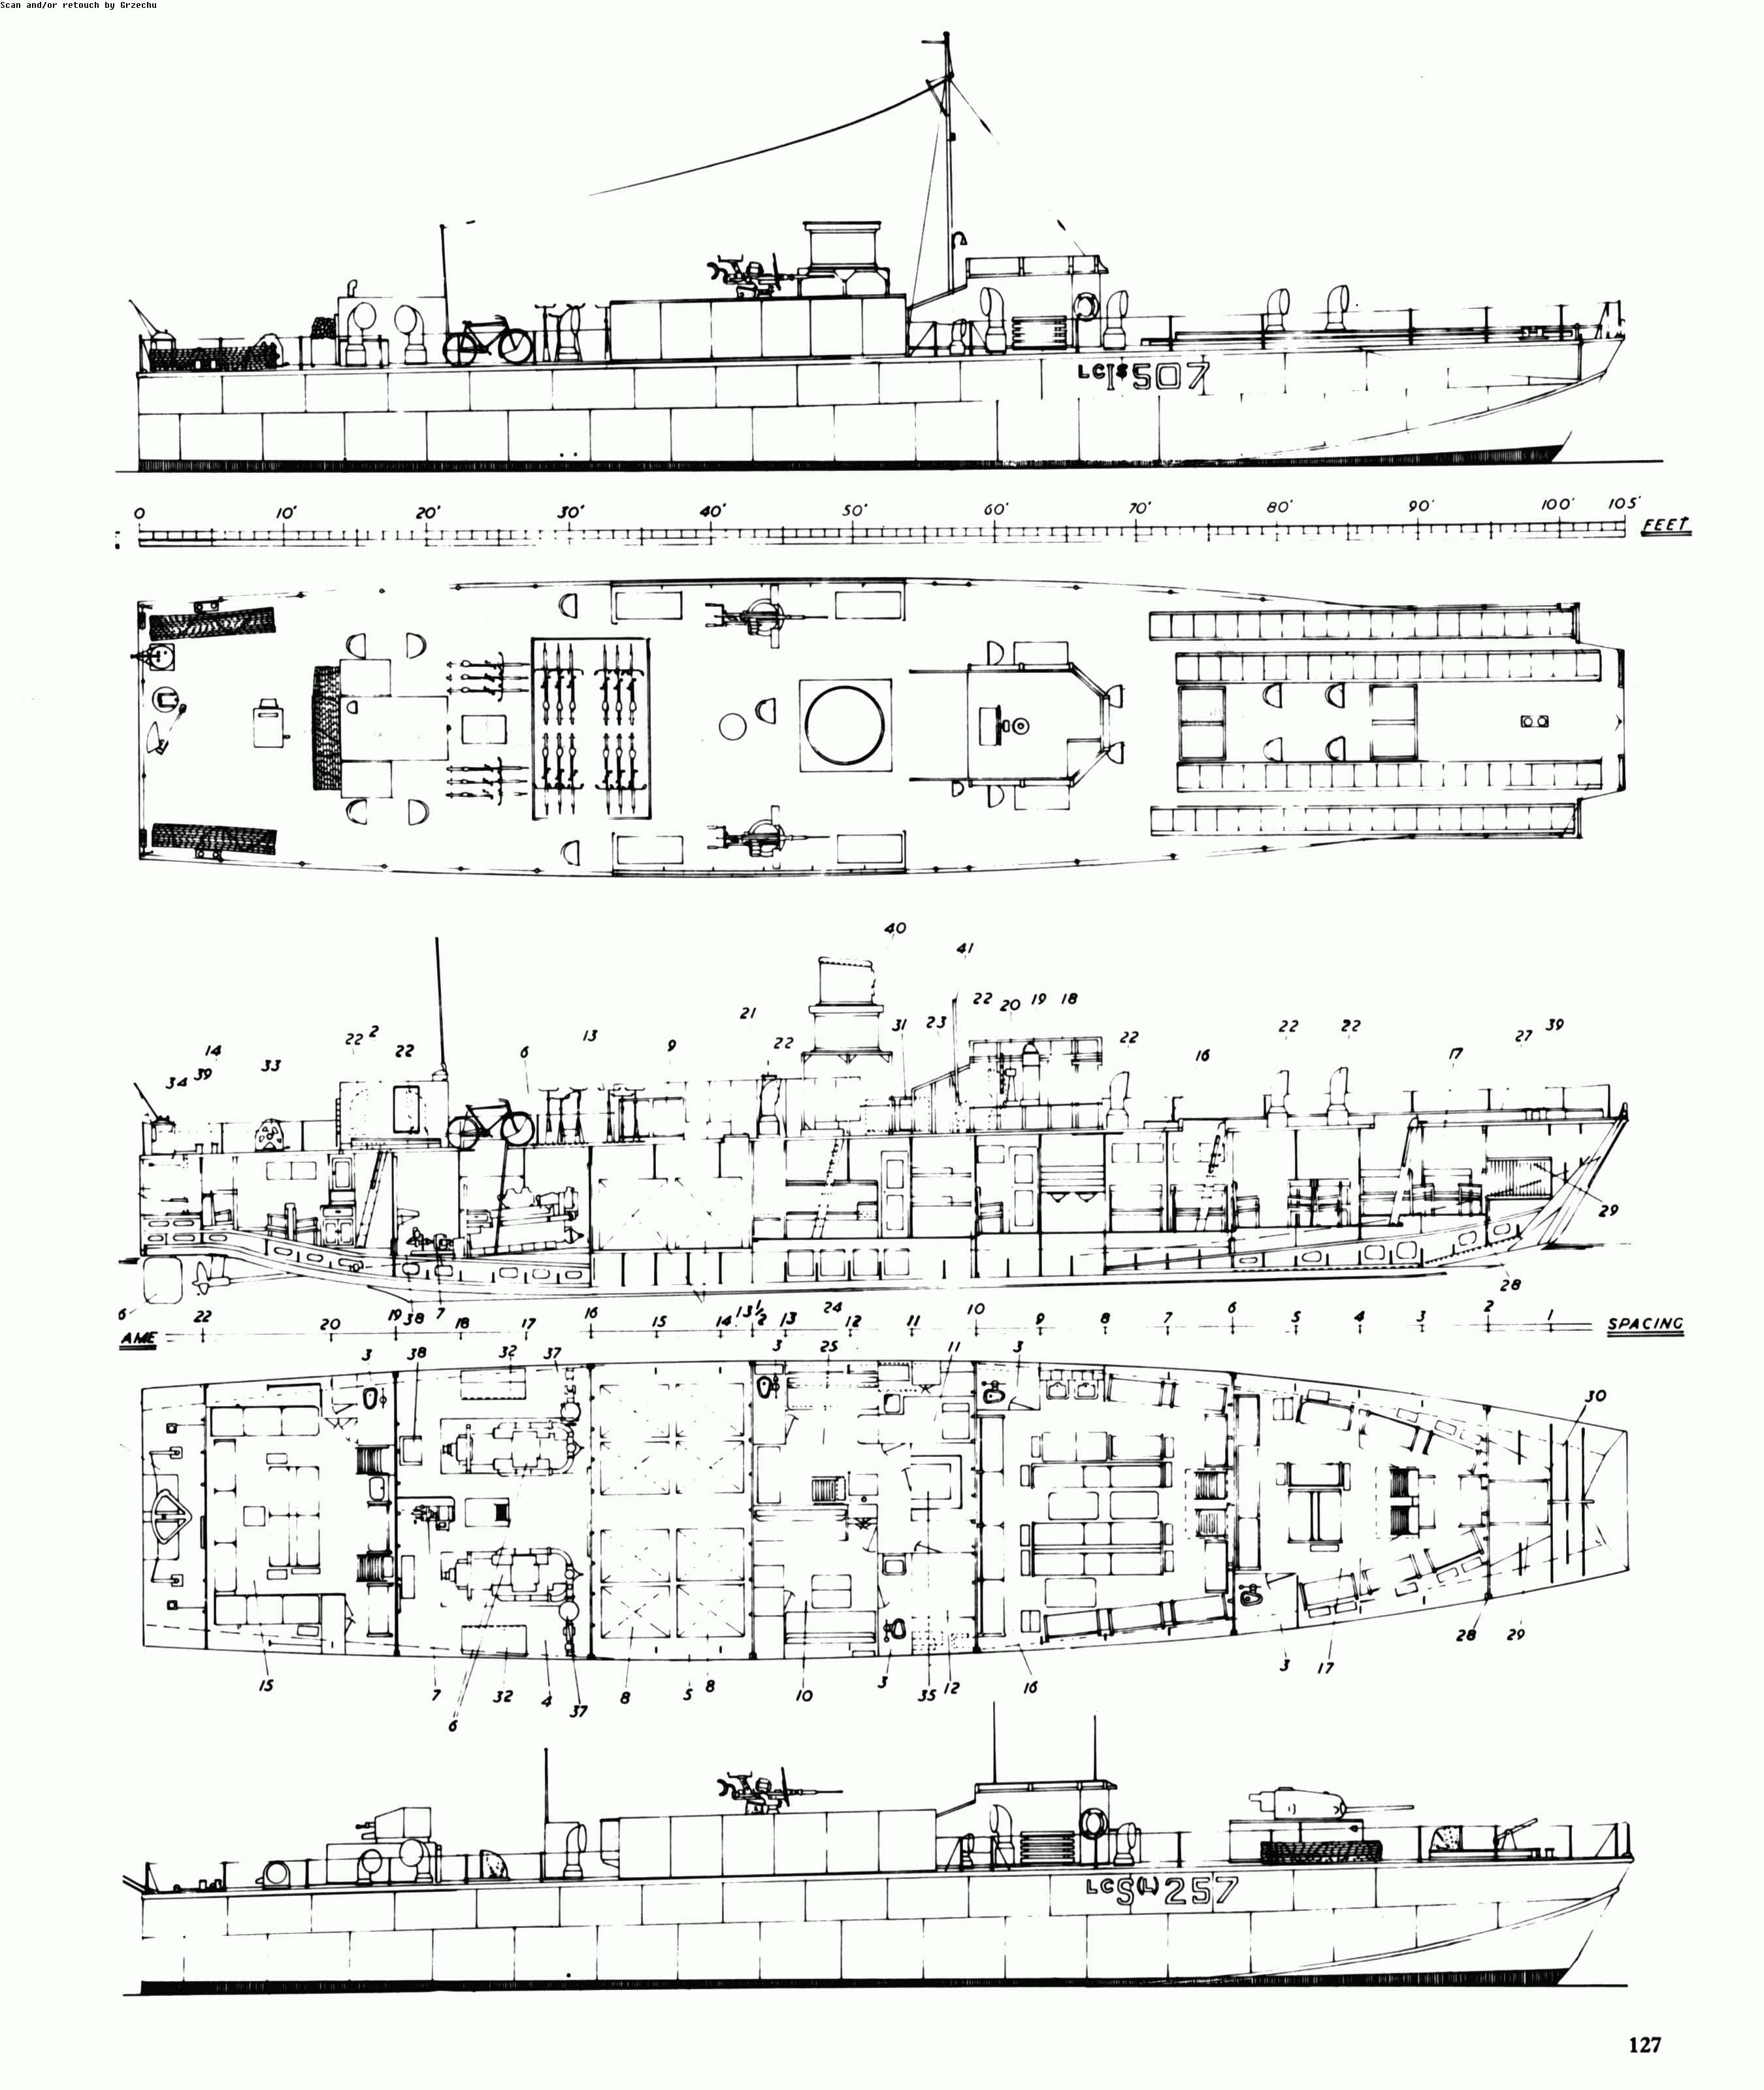 Allied Coastal Forces of World War II (1) Fairmile designs & U.S. submarine chasers_Page_129.jpg